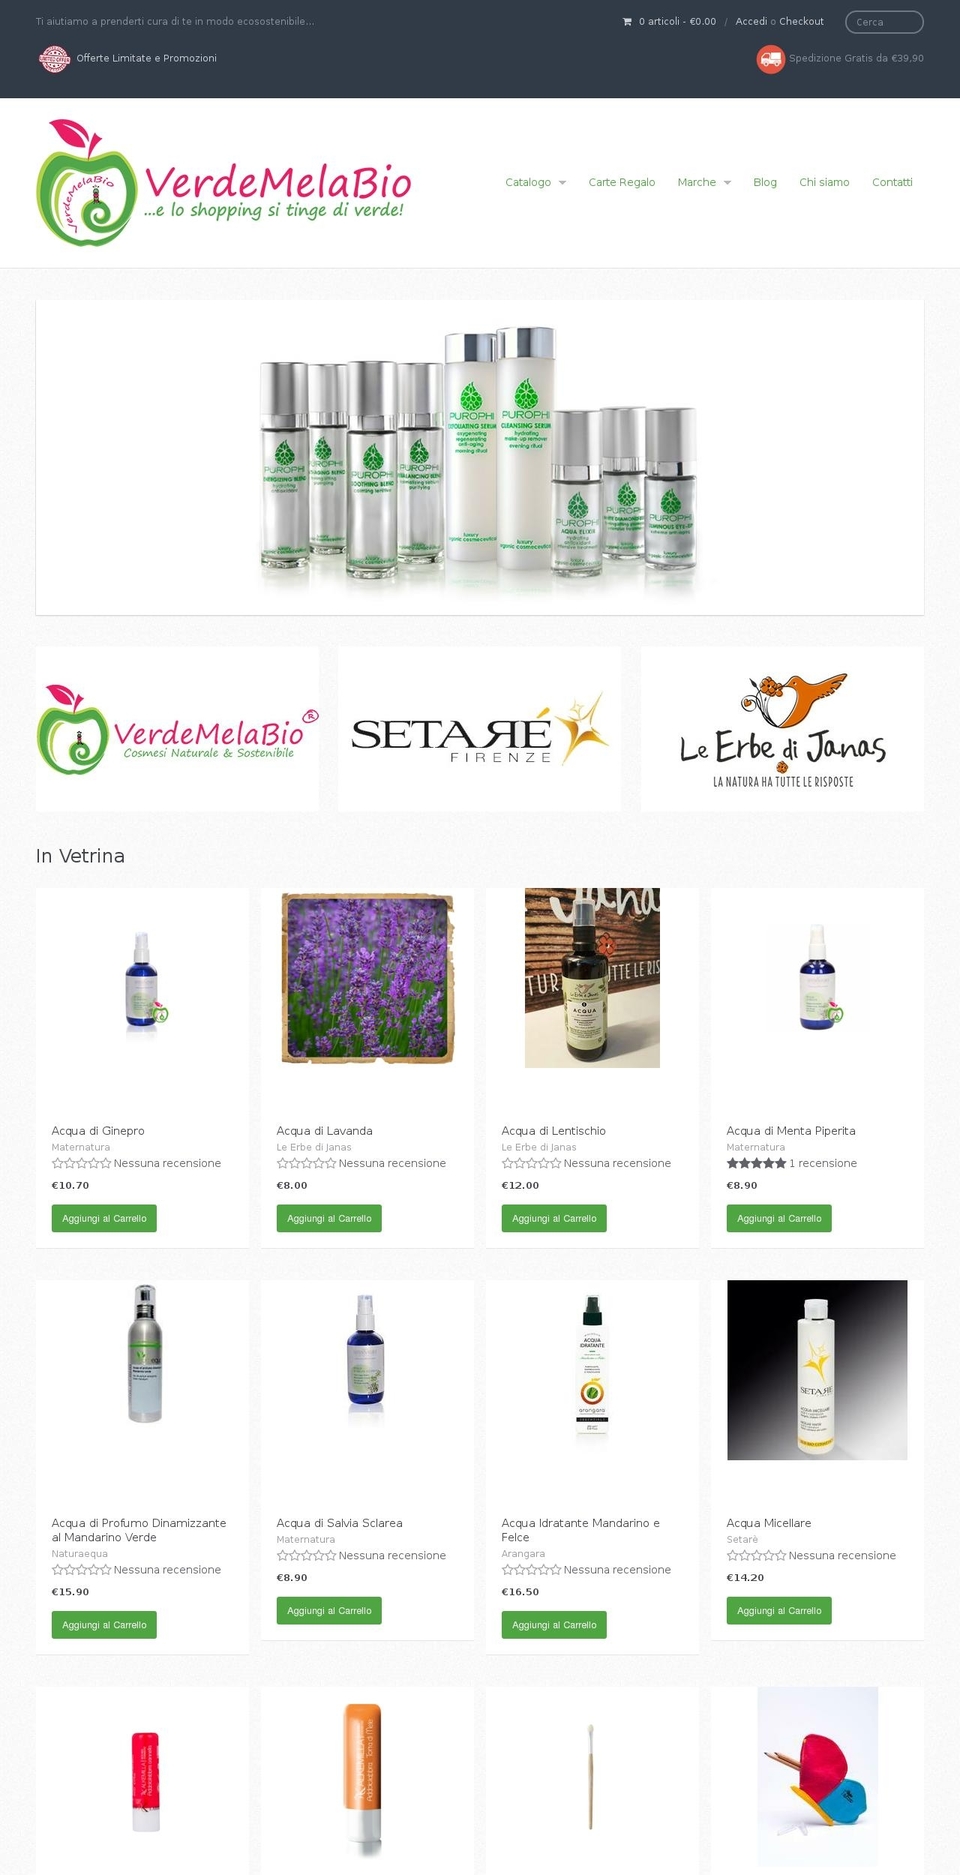 verdemelabio.it shopify website screenshot